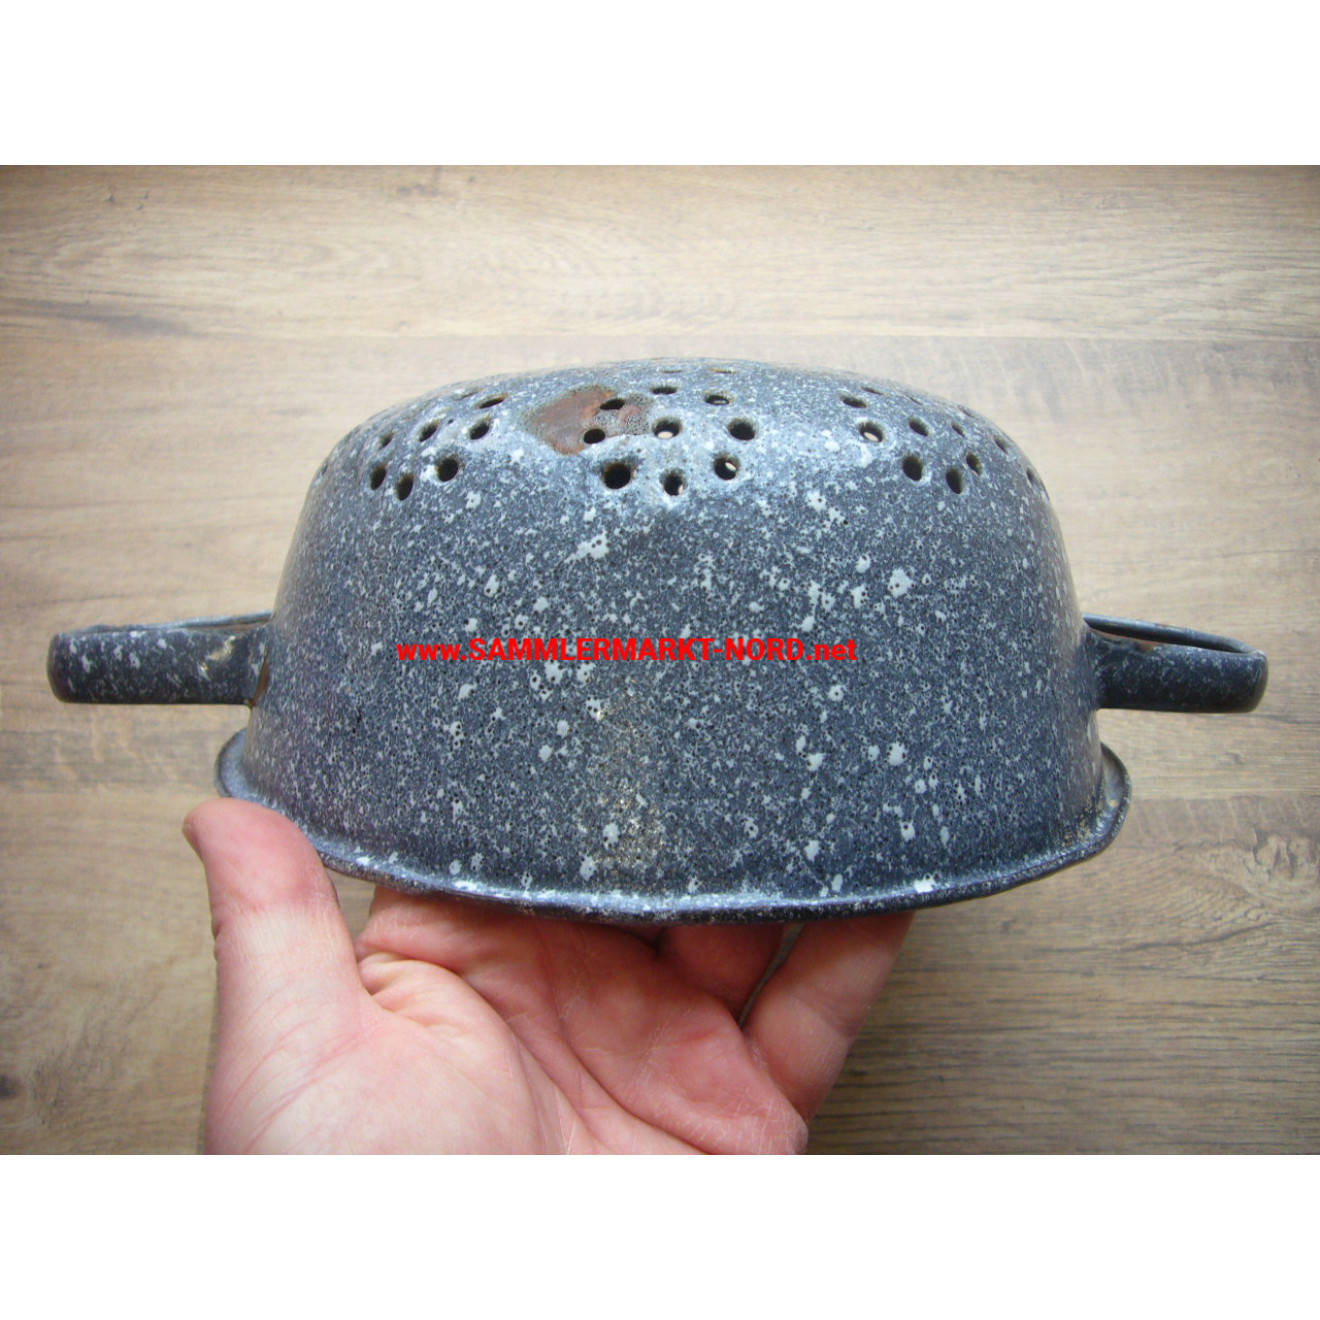 Enamelled pasta strainer - former Wehrmacht steel helmet